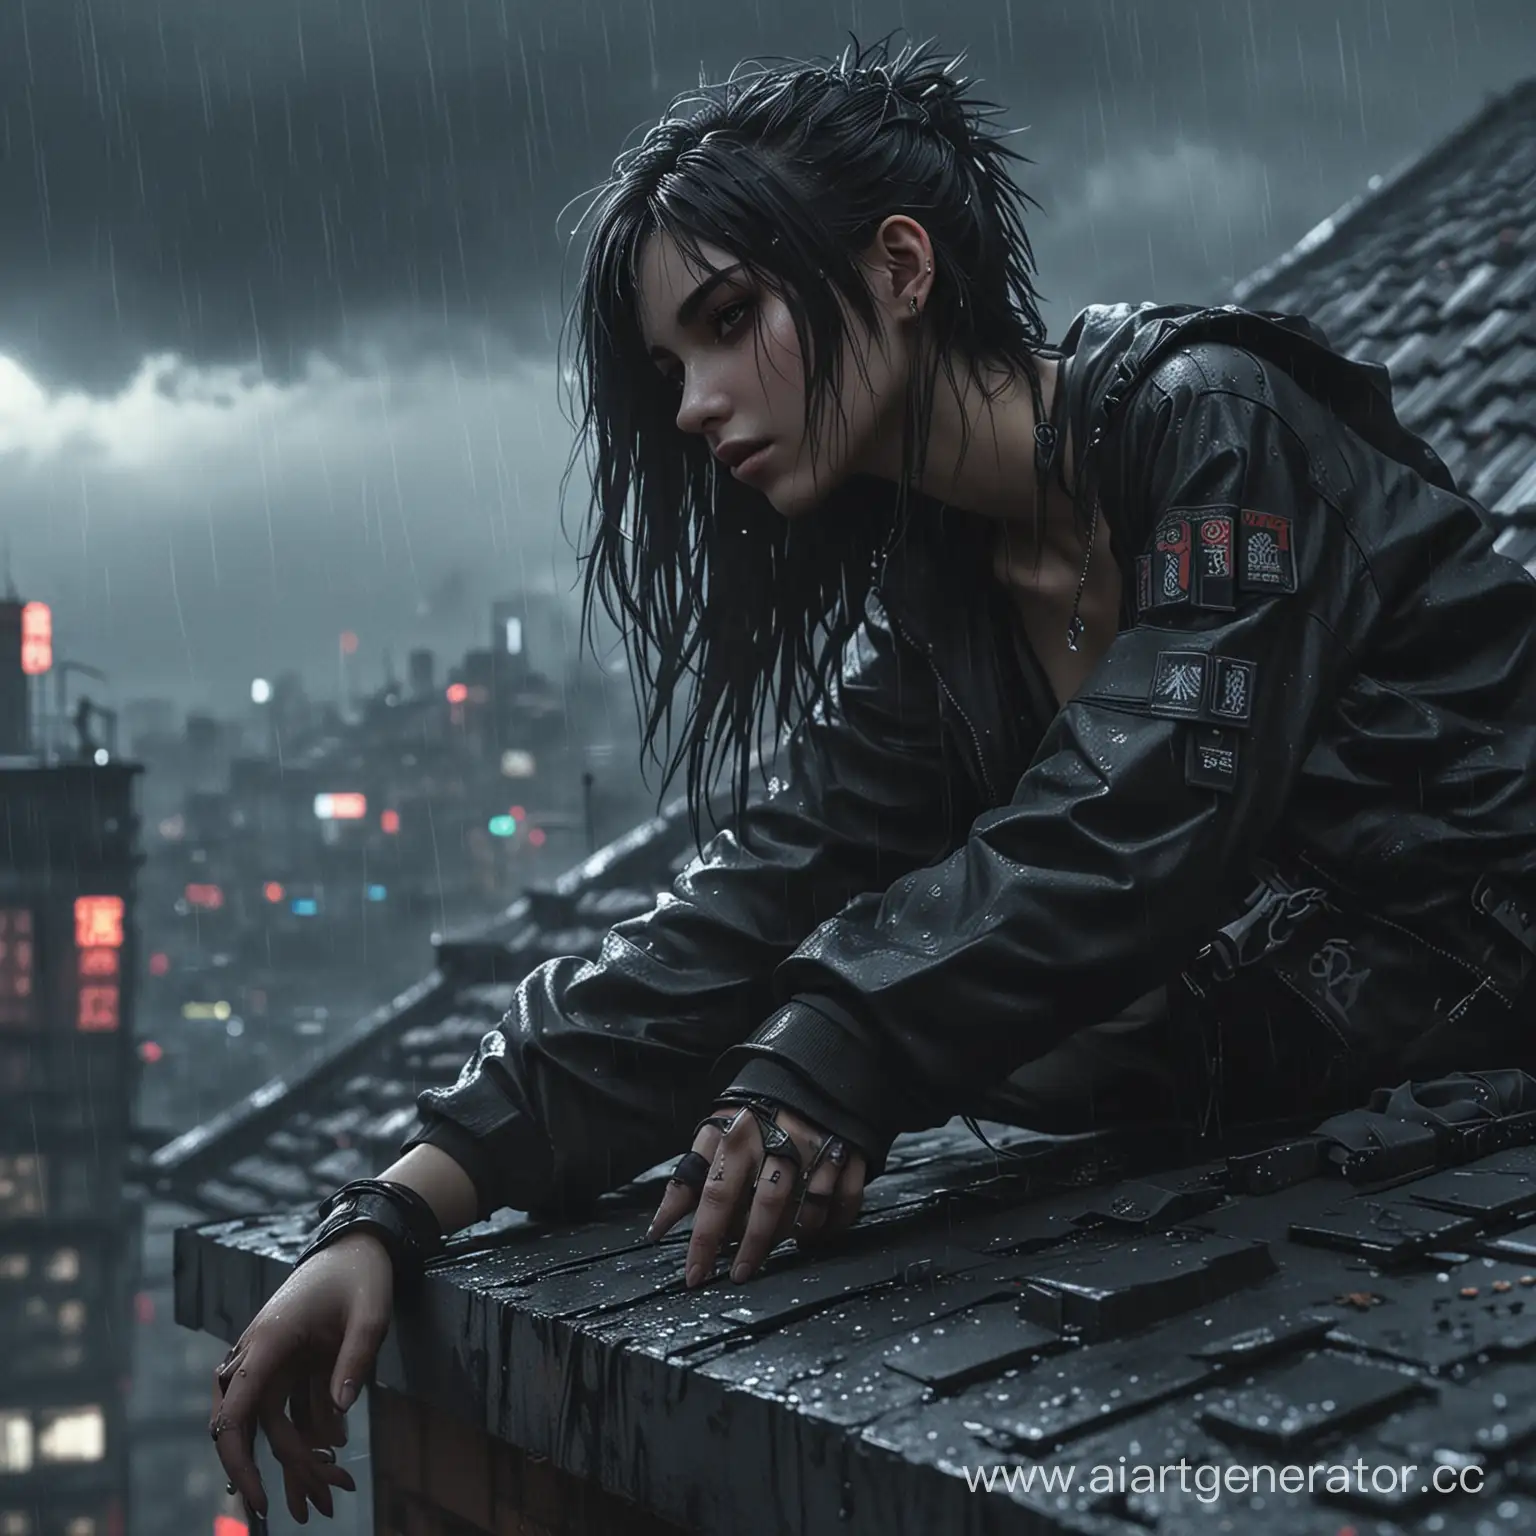 Cyberpunk-Anime-Emo-Girl-Lying-on-Rooftop-Edge-in-Rain-and-Fog